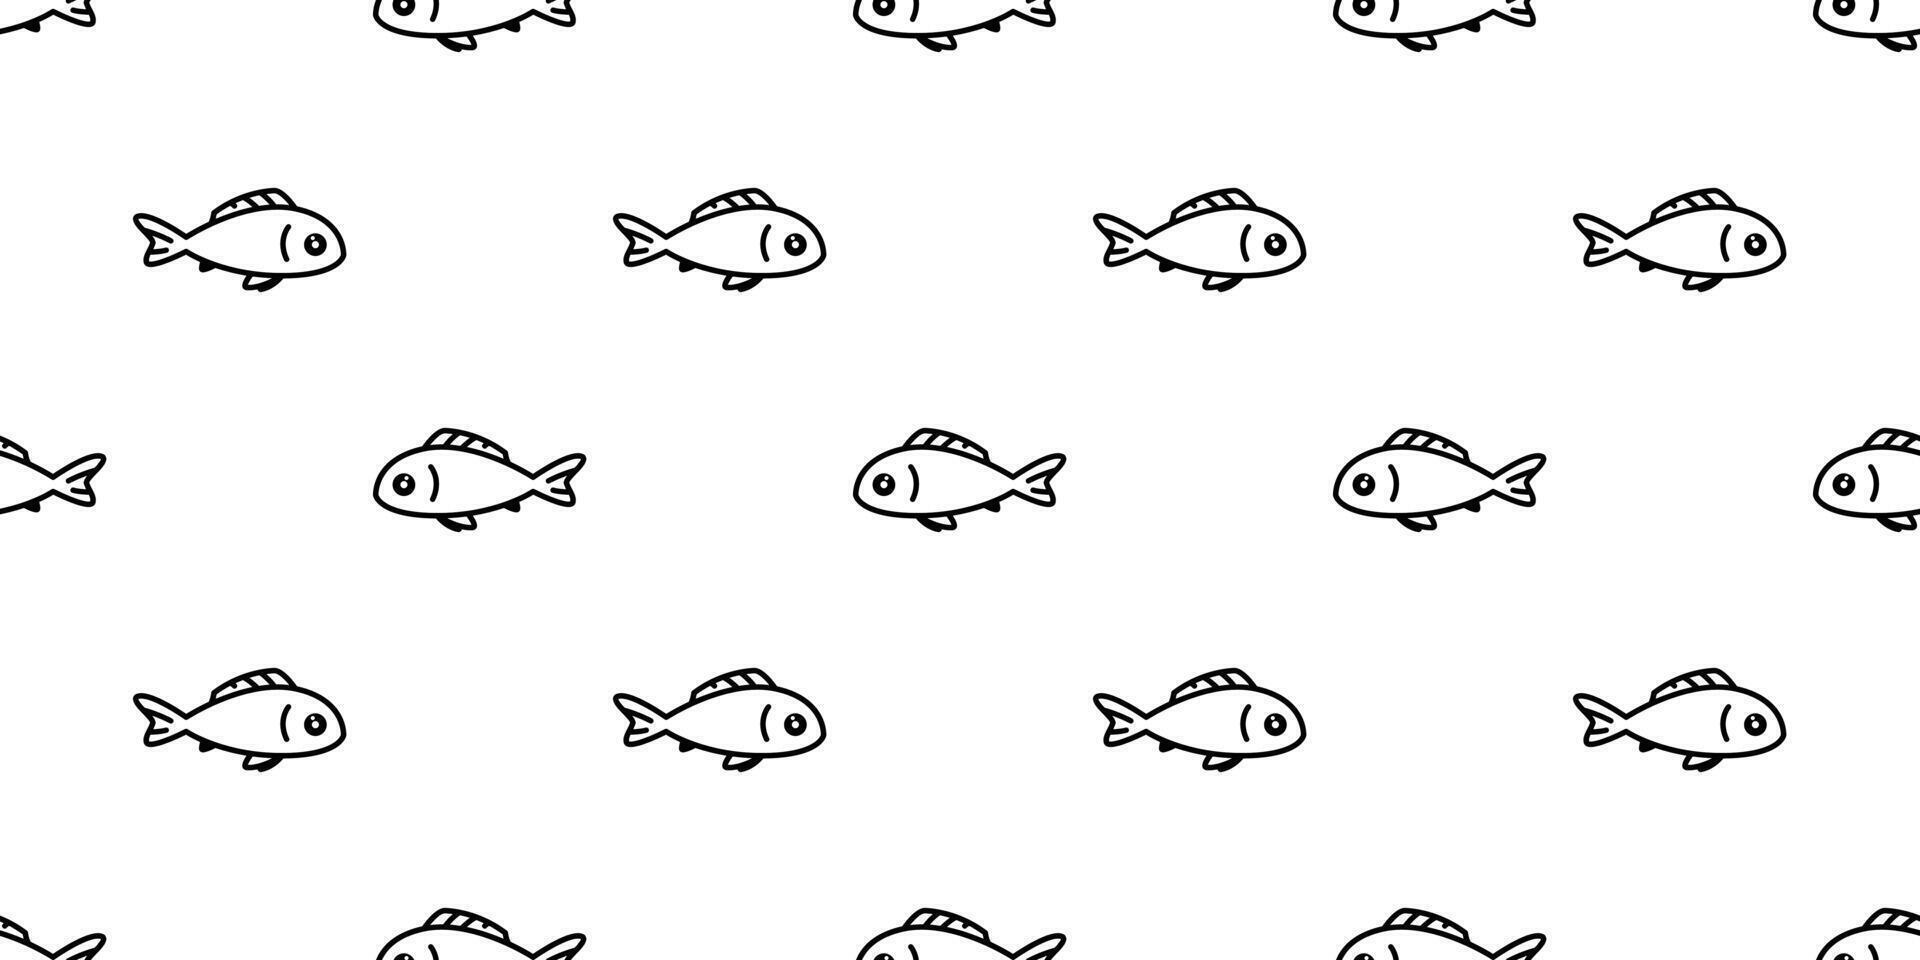 fish Seamless pattern salmon vector tuna shark cartoon dolphin scarf isolated whale ocean sea tile background repeat wallpaper illustration doodle animal design